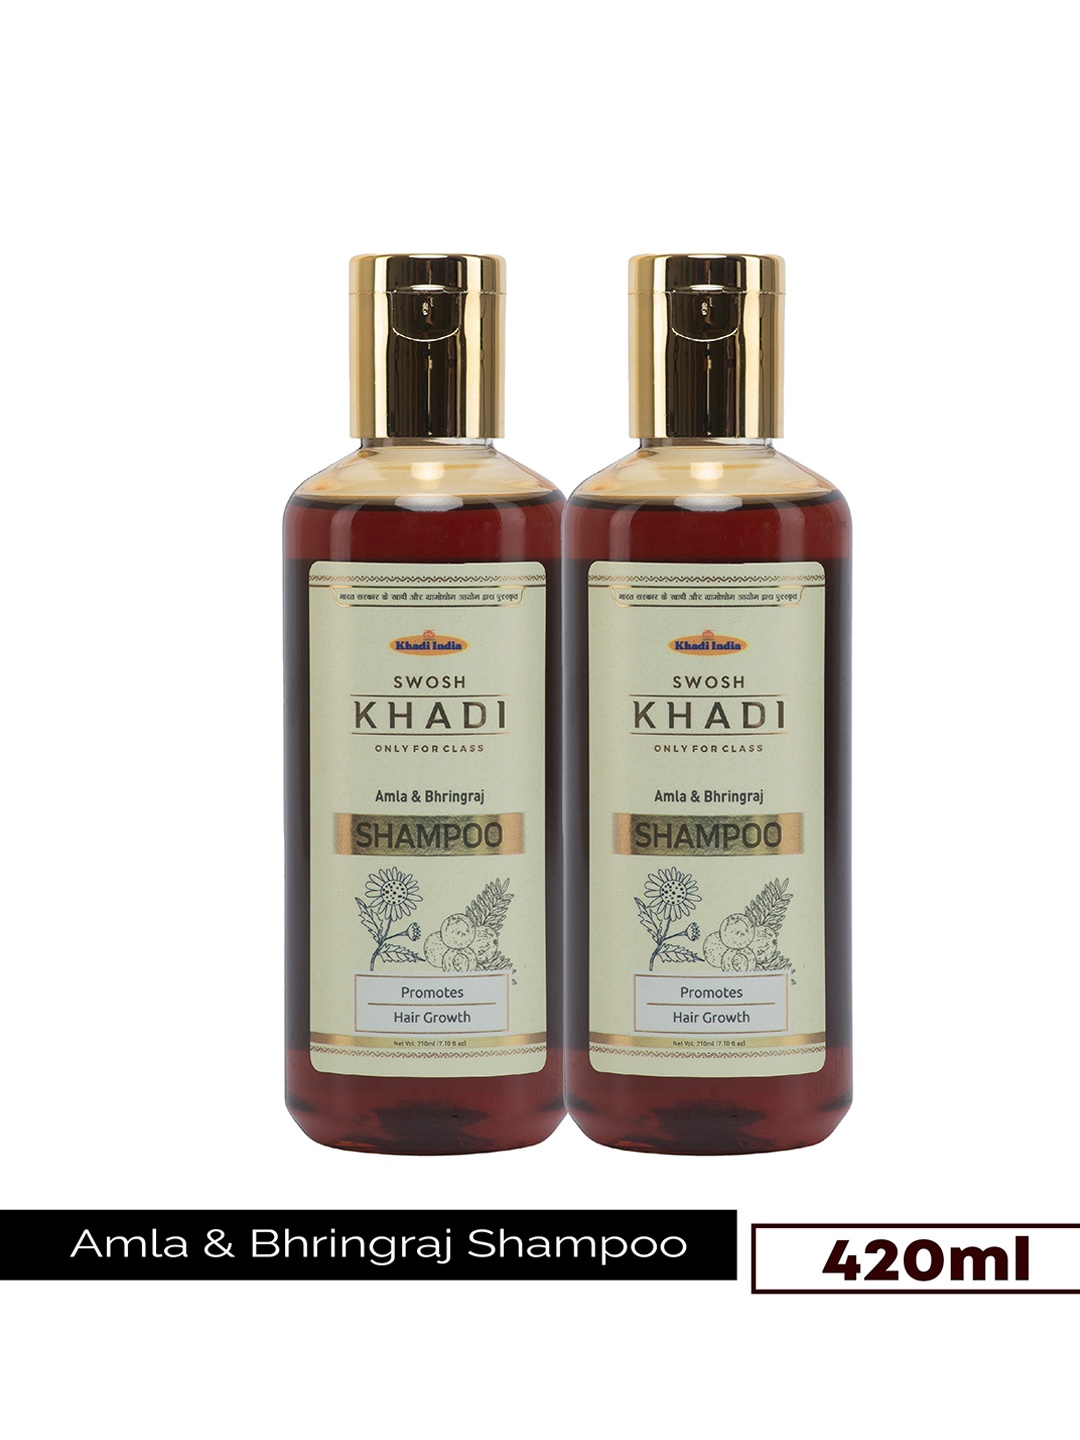 

SWOSH Set of 2 Khadi Amla & Bhringraj Shampoo for Hair Growth - 210 ml Each, Brown